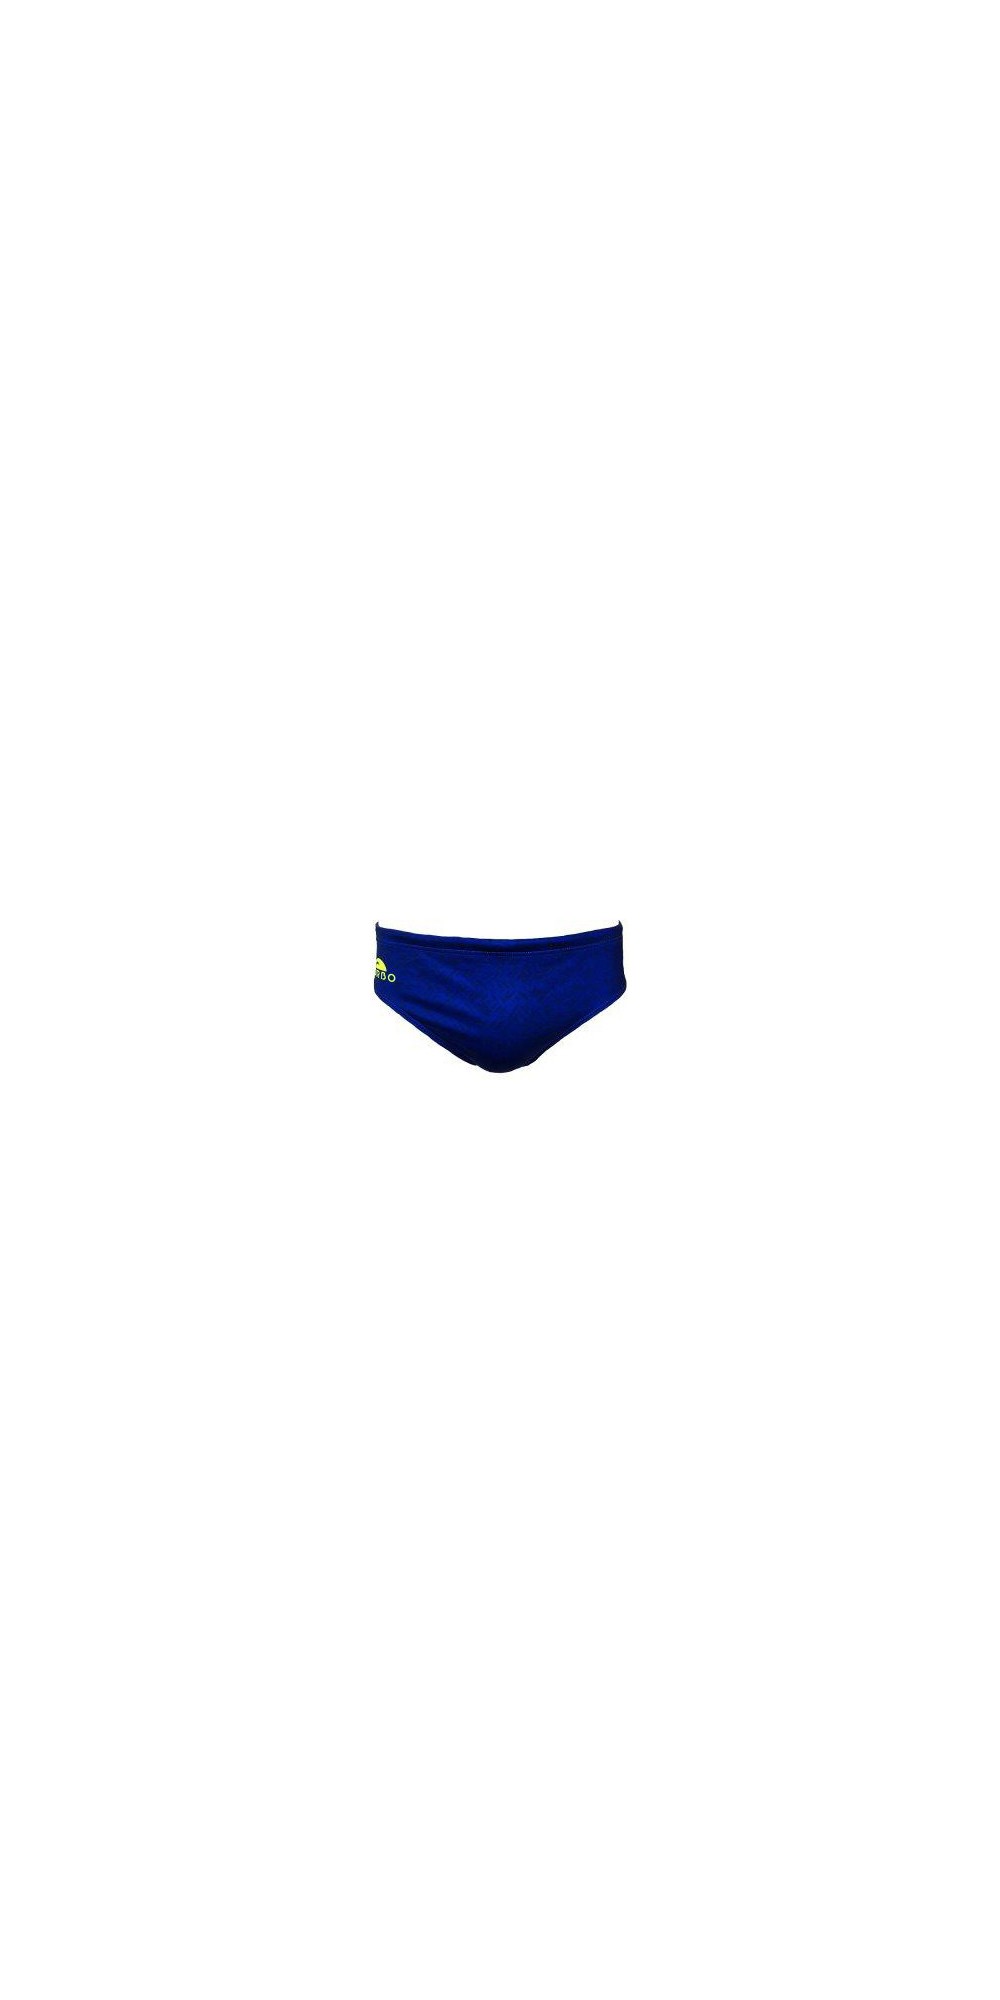 Plain Color Bleu Marine (3 Semaines)